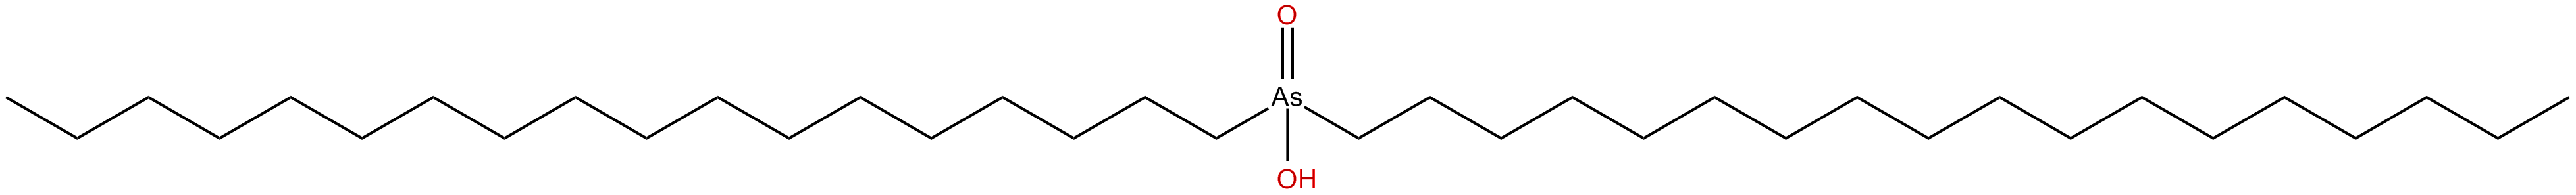 Image of hydroxydioctadecyl arsine oxide